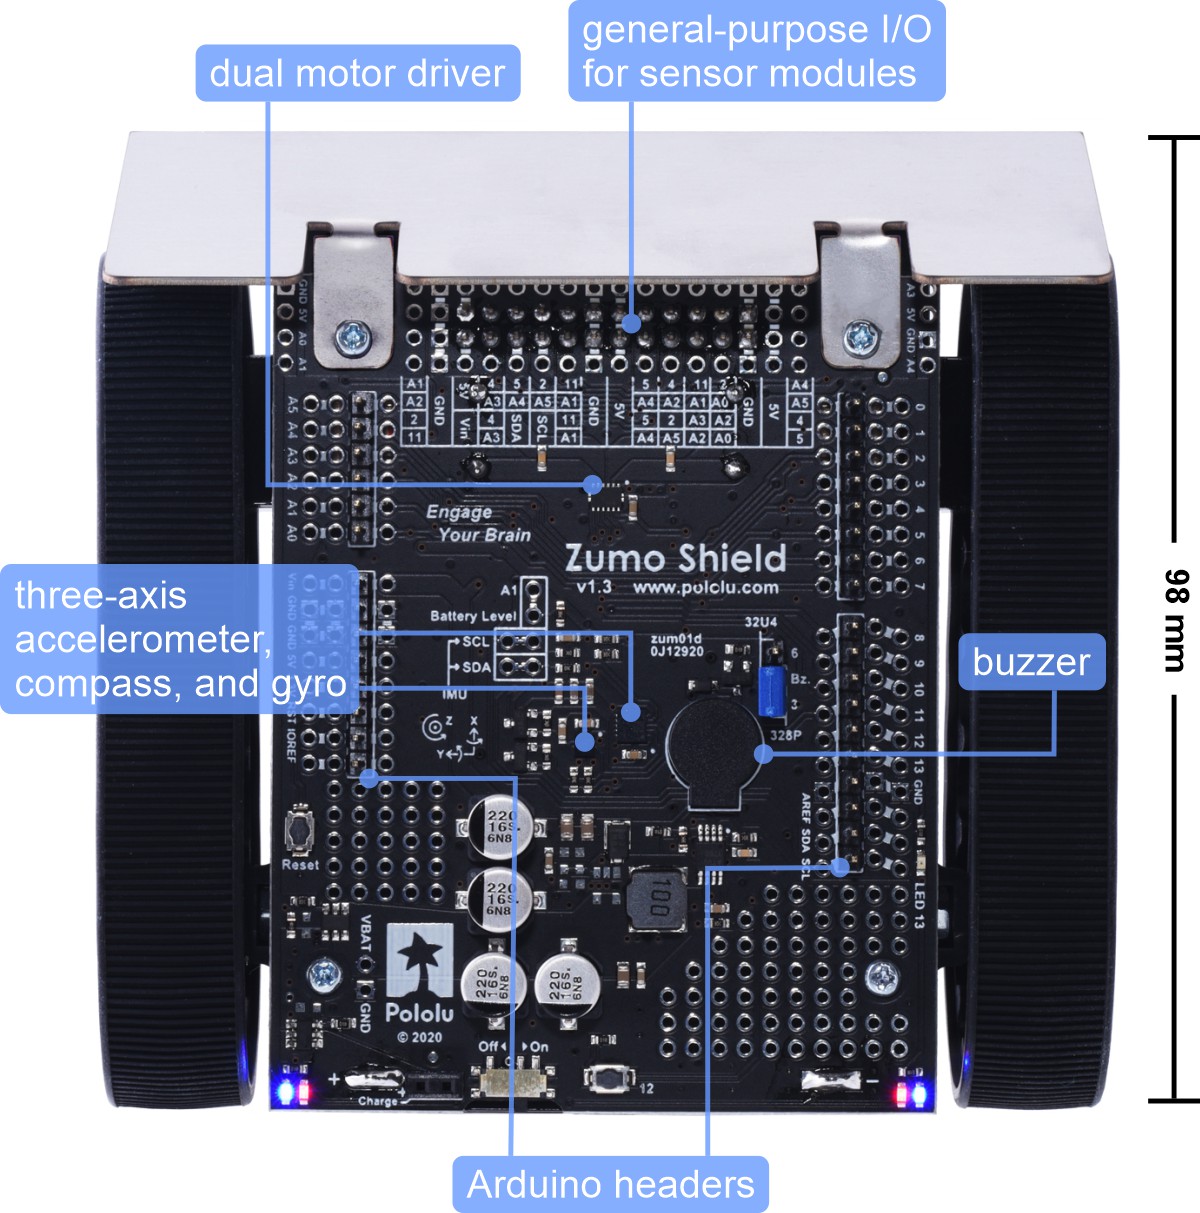 Kit de Robot Zumo c/ Orugas para Arduino (c/ Motores de 75:1 HP) - Haga Clic para Ampliar